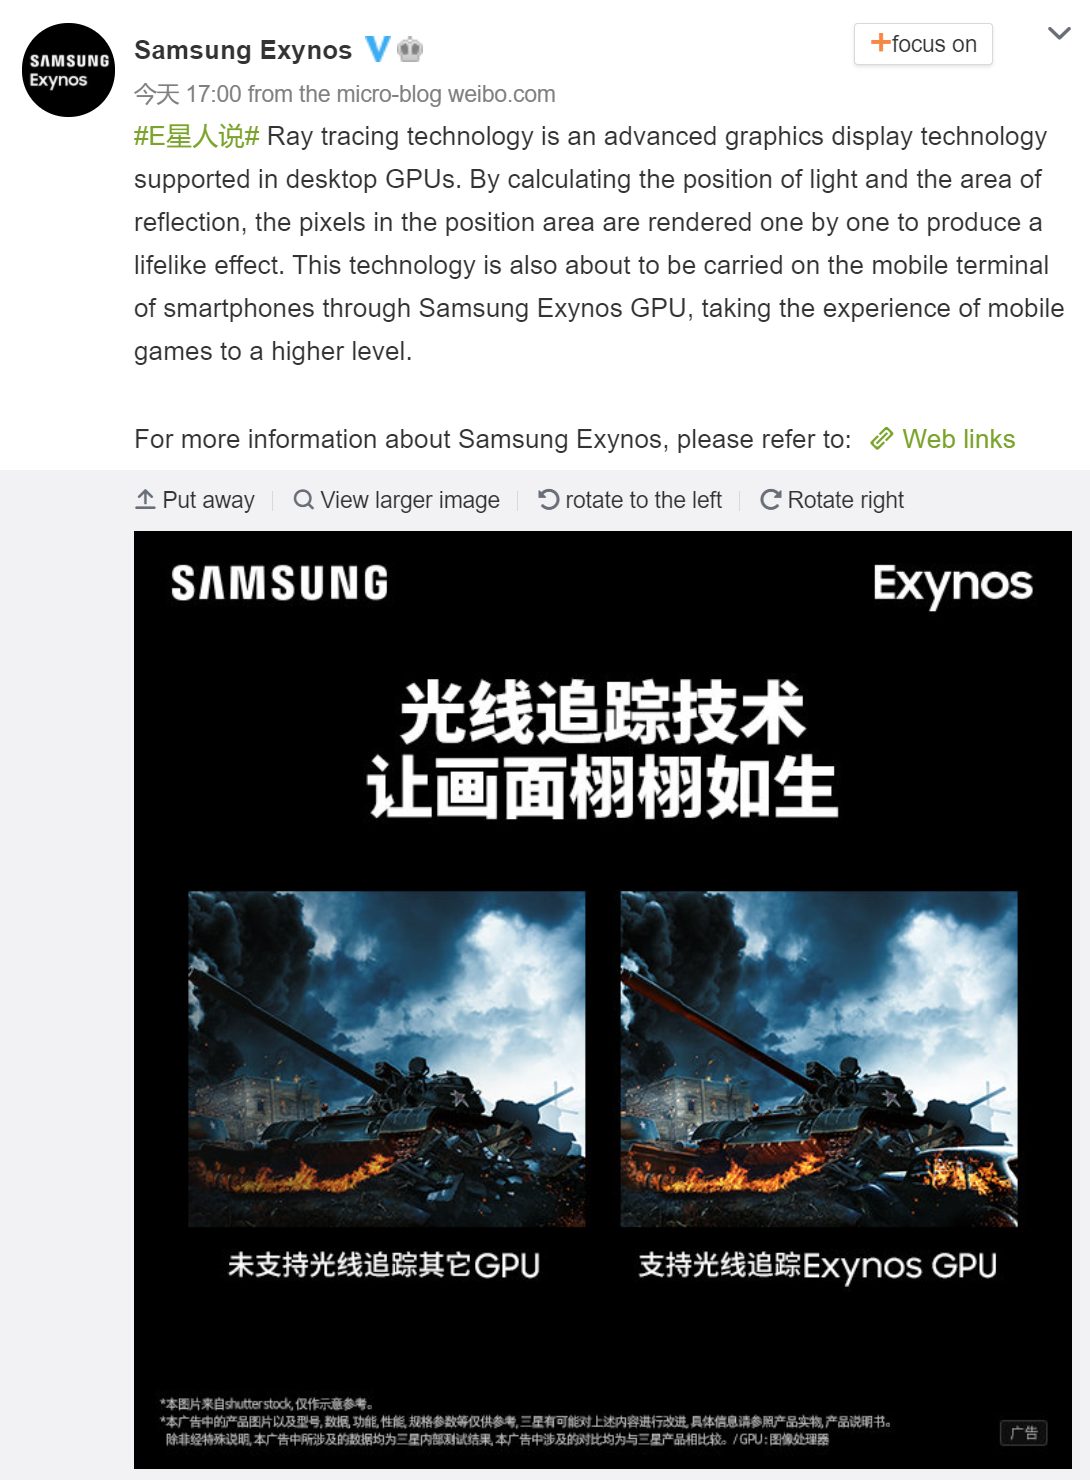 Samsung Exynos com Ray Tracing